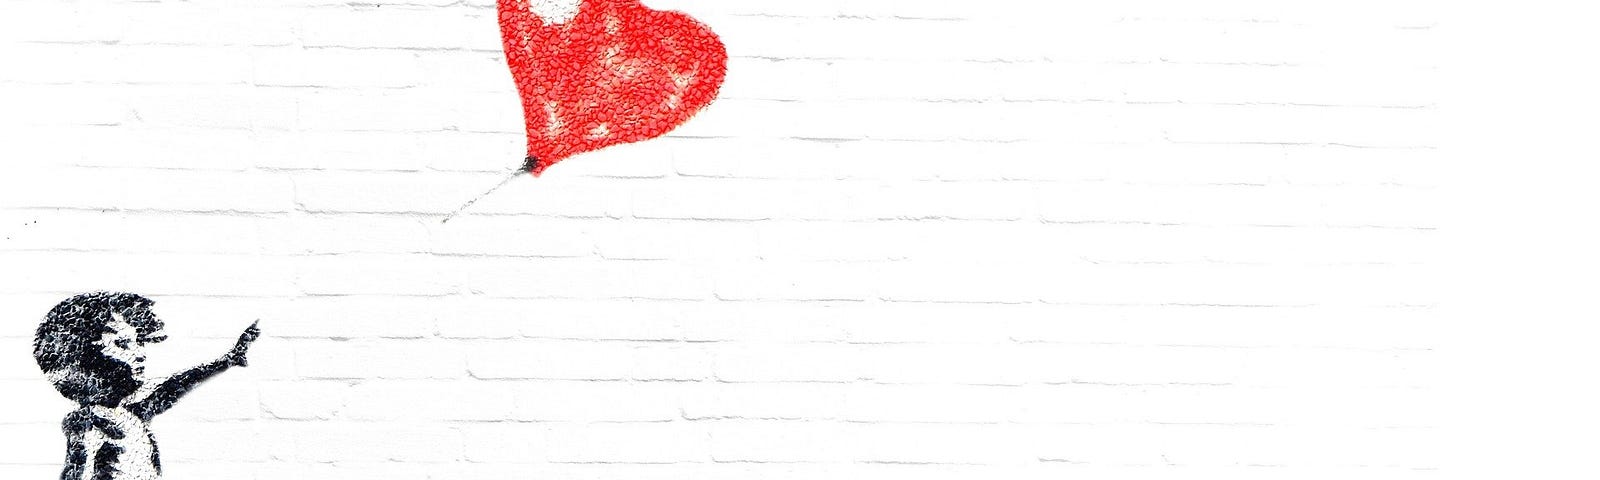 Little girl releasing a red heart-shaped balloon.